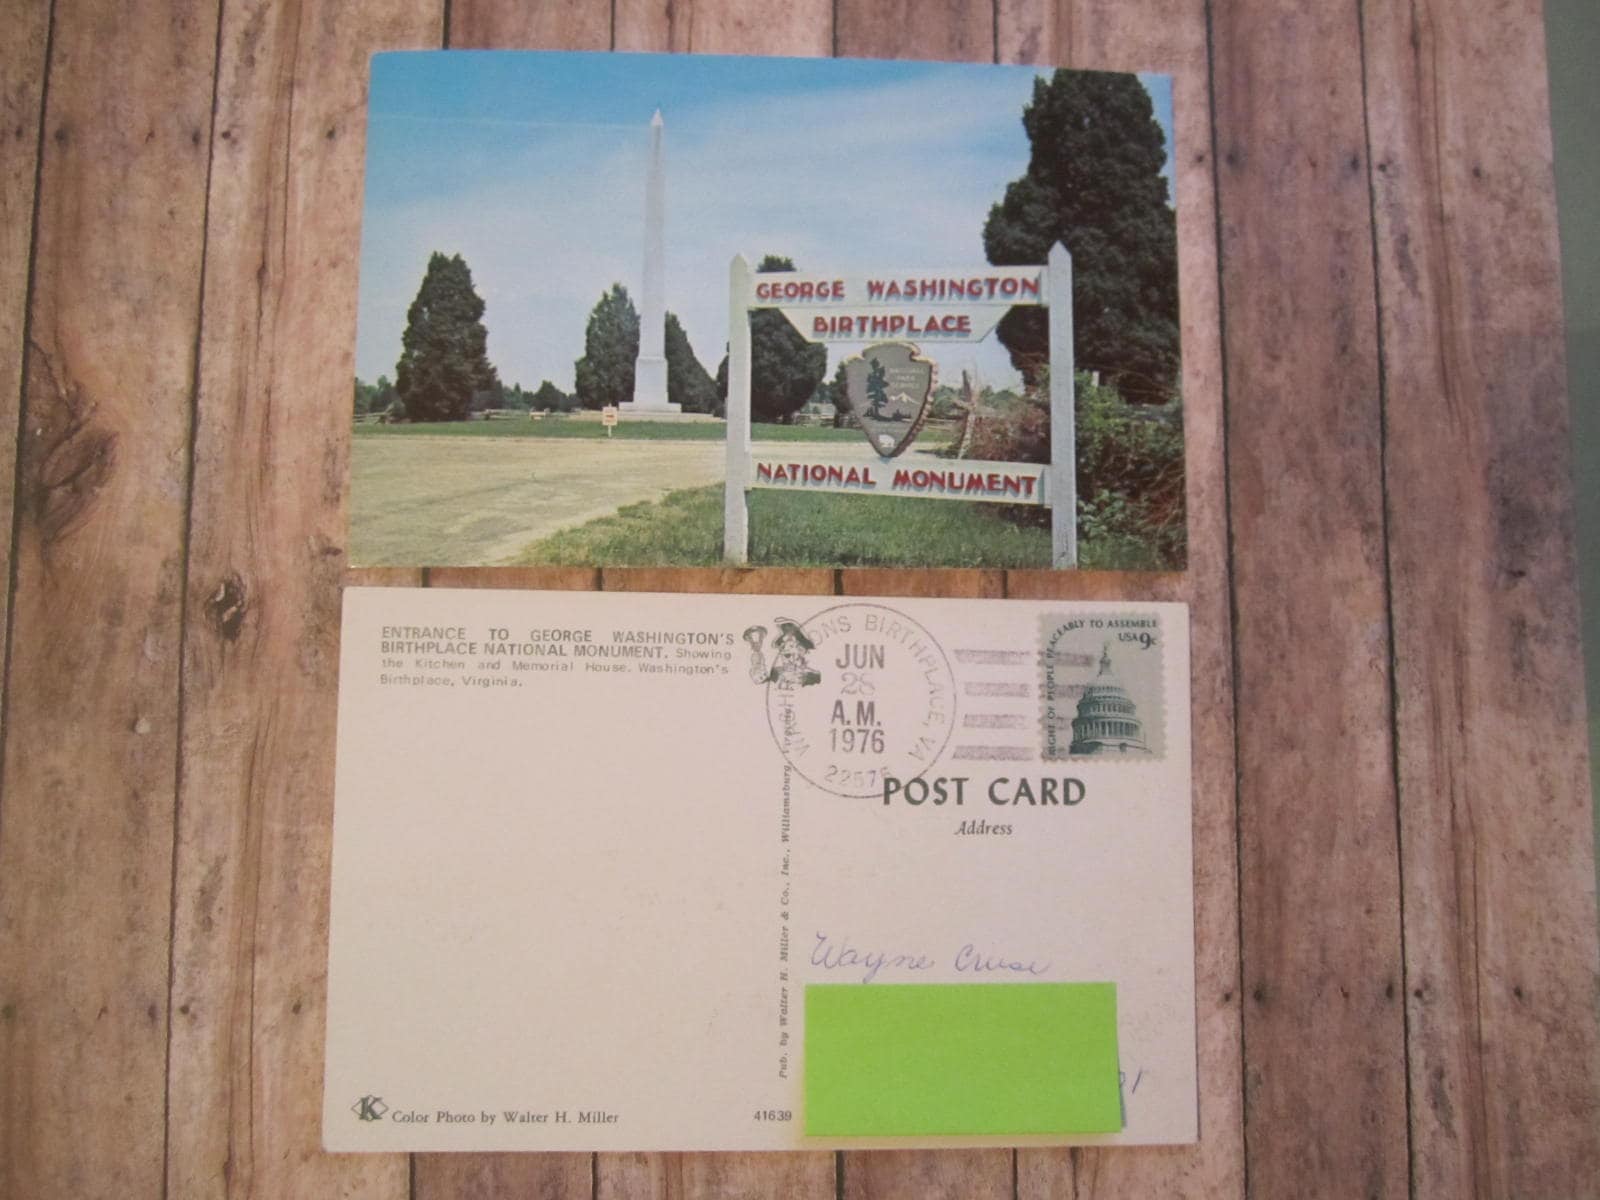 George Washington Birthplace Postcard - June 28, 1976